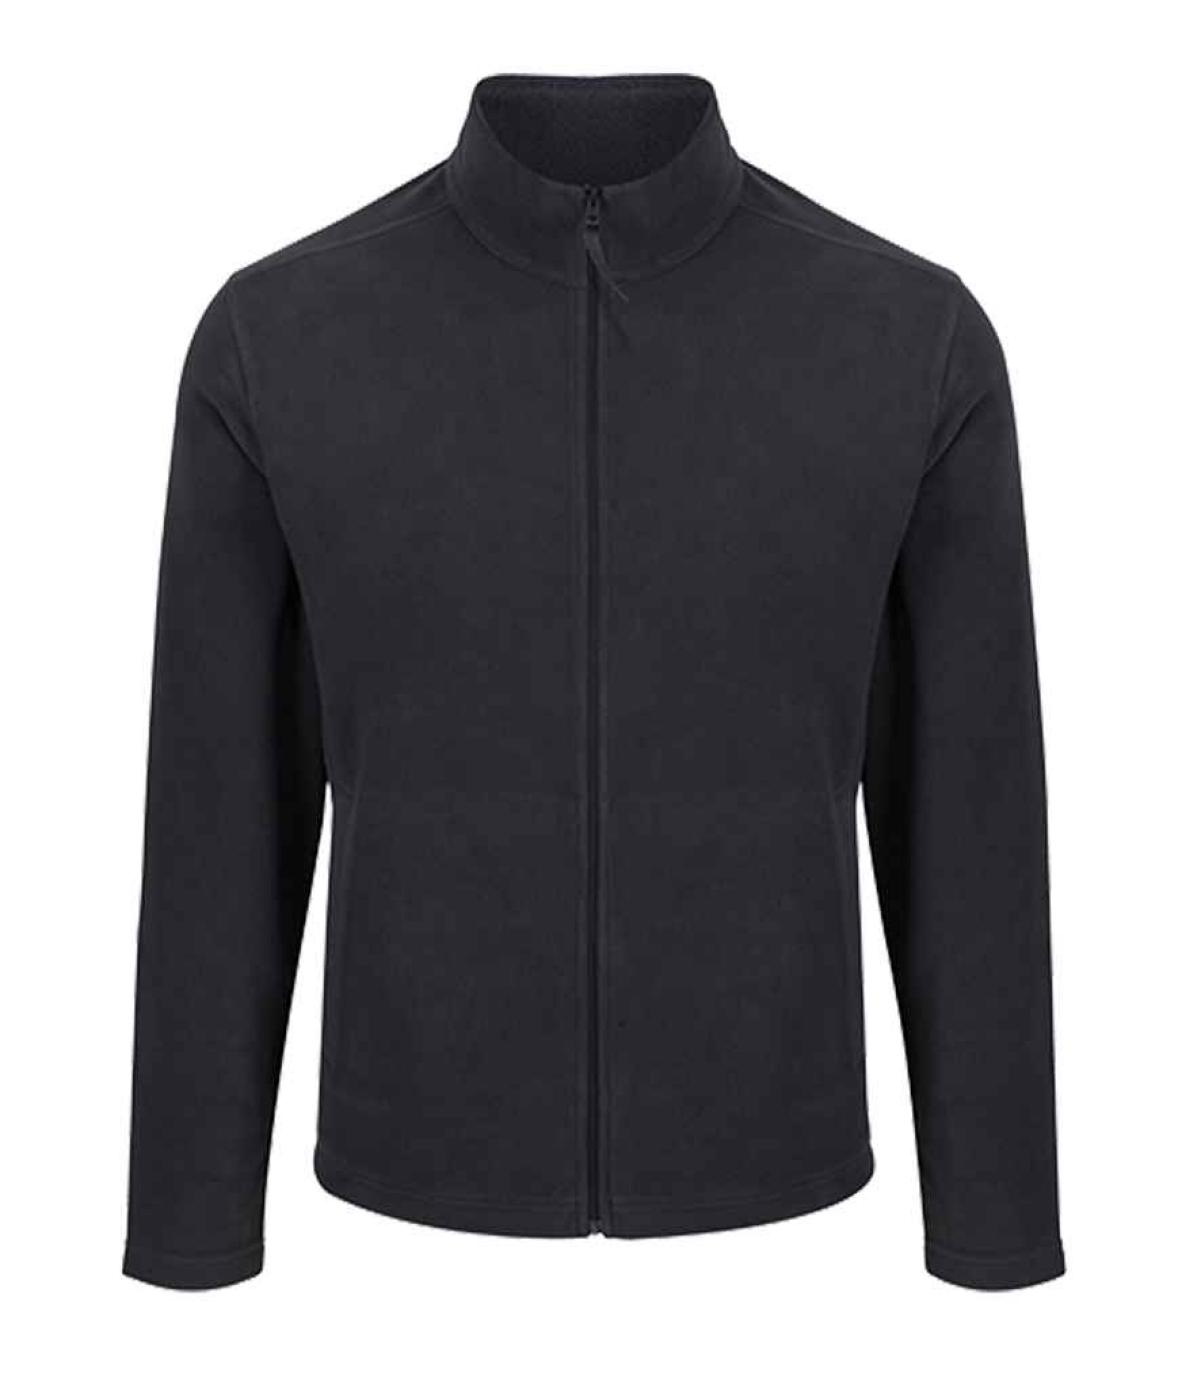 Regatta Classic Micro Fleece Jacket - Seal Grey | Order Uniform UK Ltd